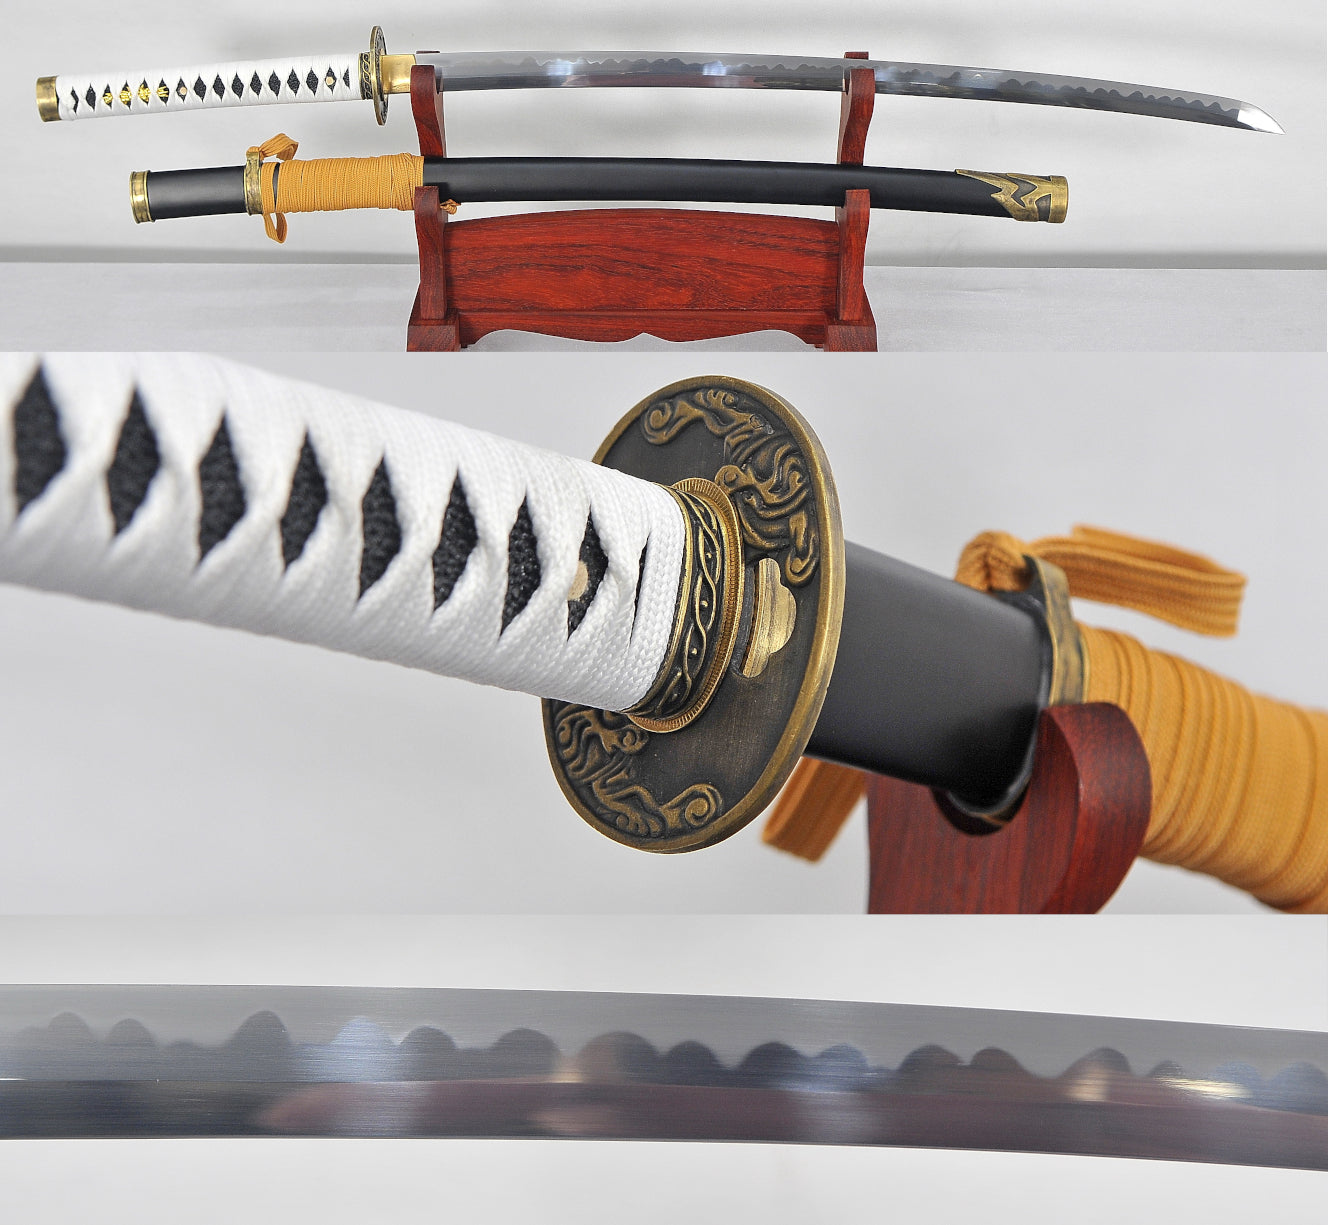 LEGO Ninjago samurai sword / katana - flat silver